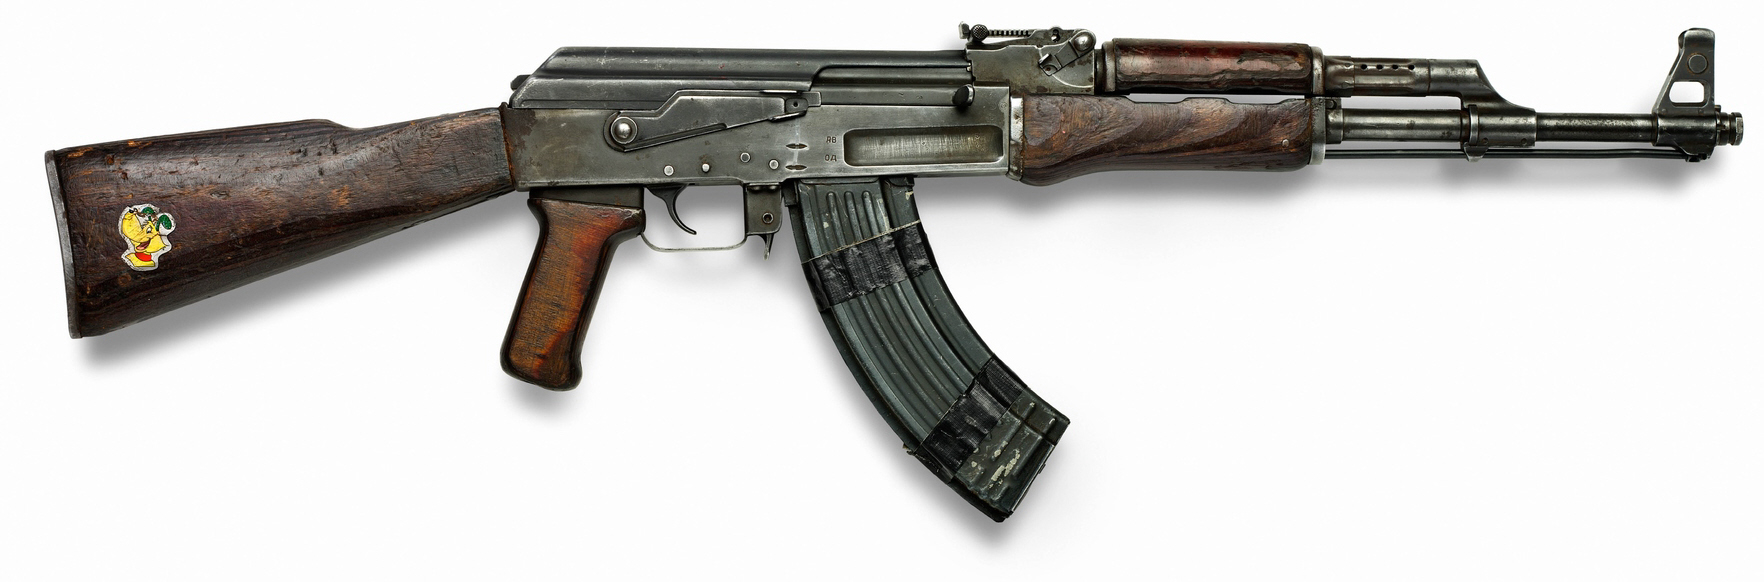 Resenha da Arma AK-47